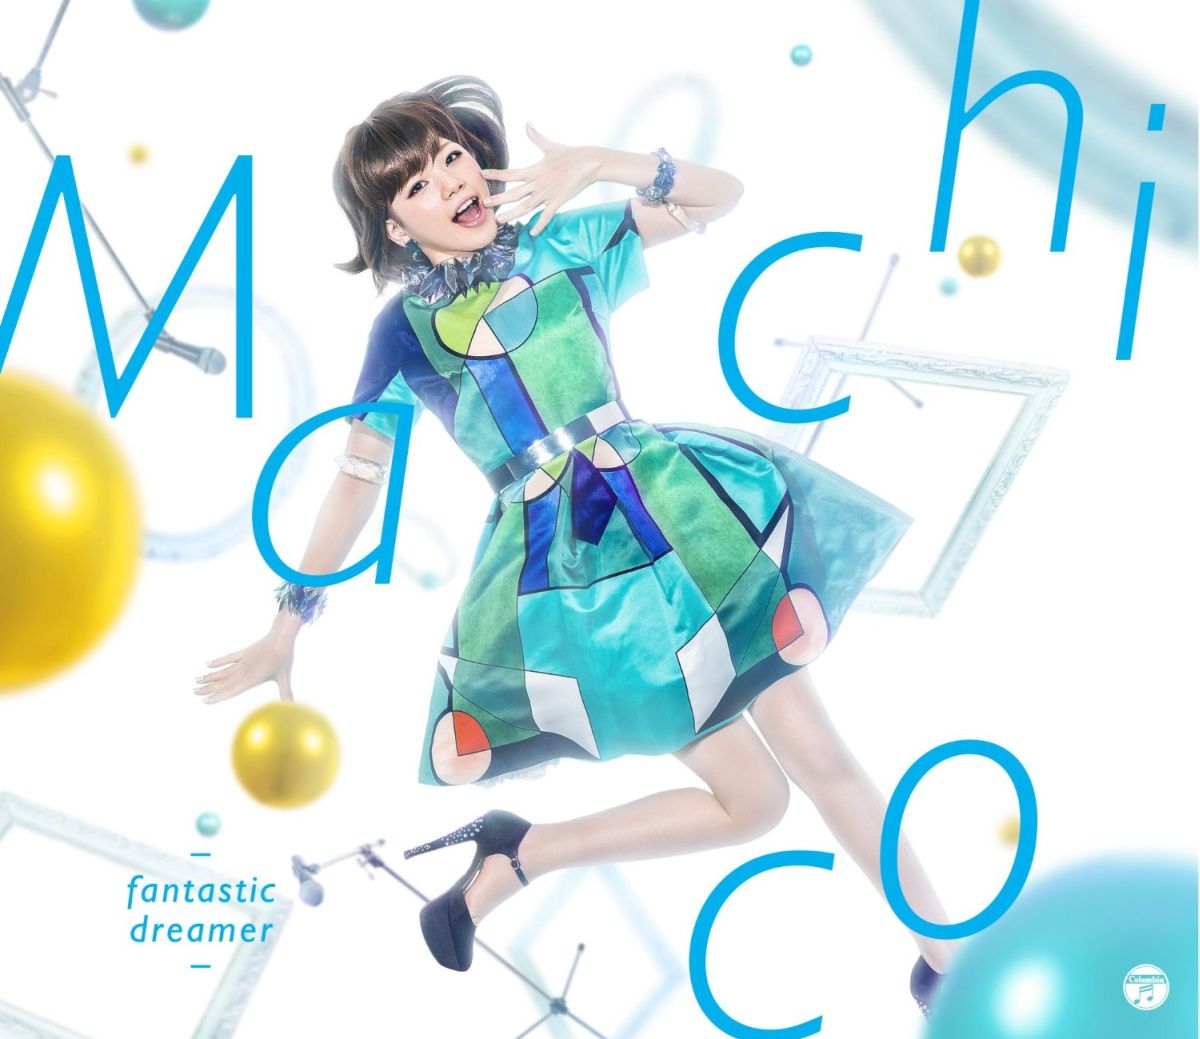 TVアニメ『この素晴らしい世界に祝福を 』オープニング テーマ「fantastic dreamer」 (DVD付限定盤) Machico